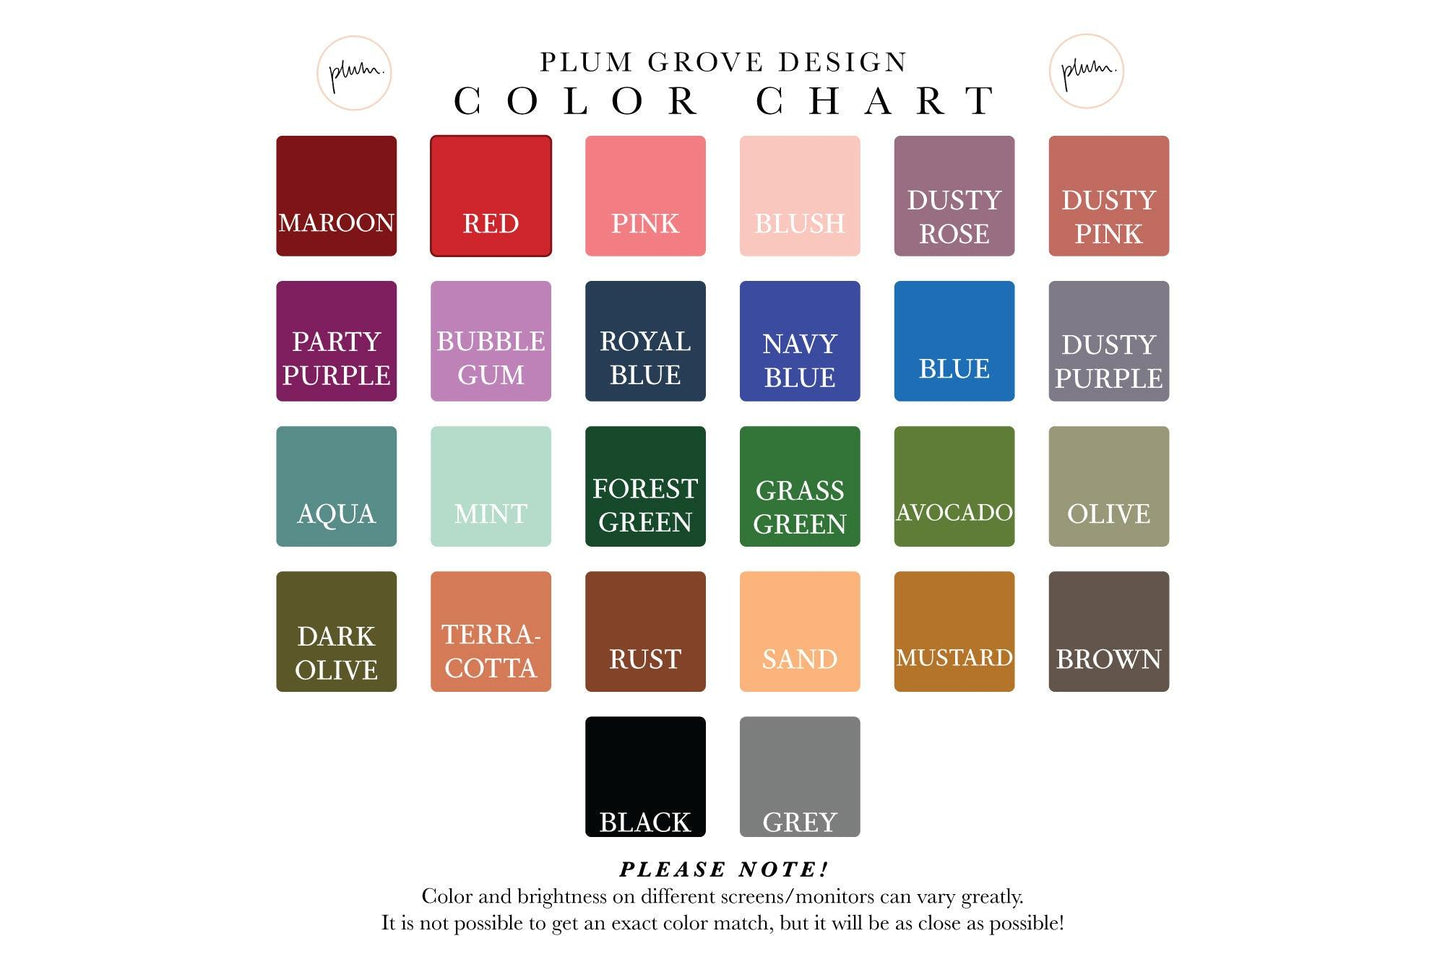 Personalized Wedding Coasters - Plum Grove Design